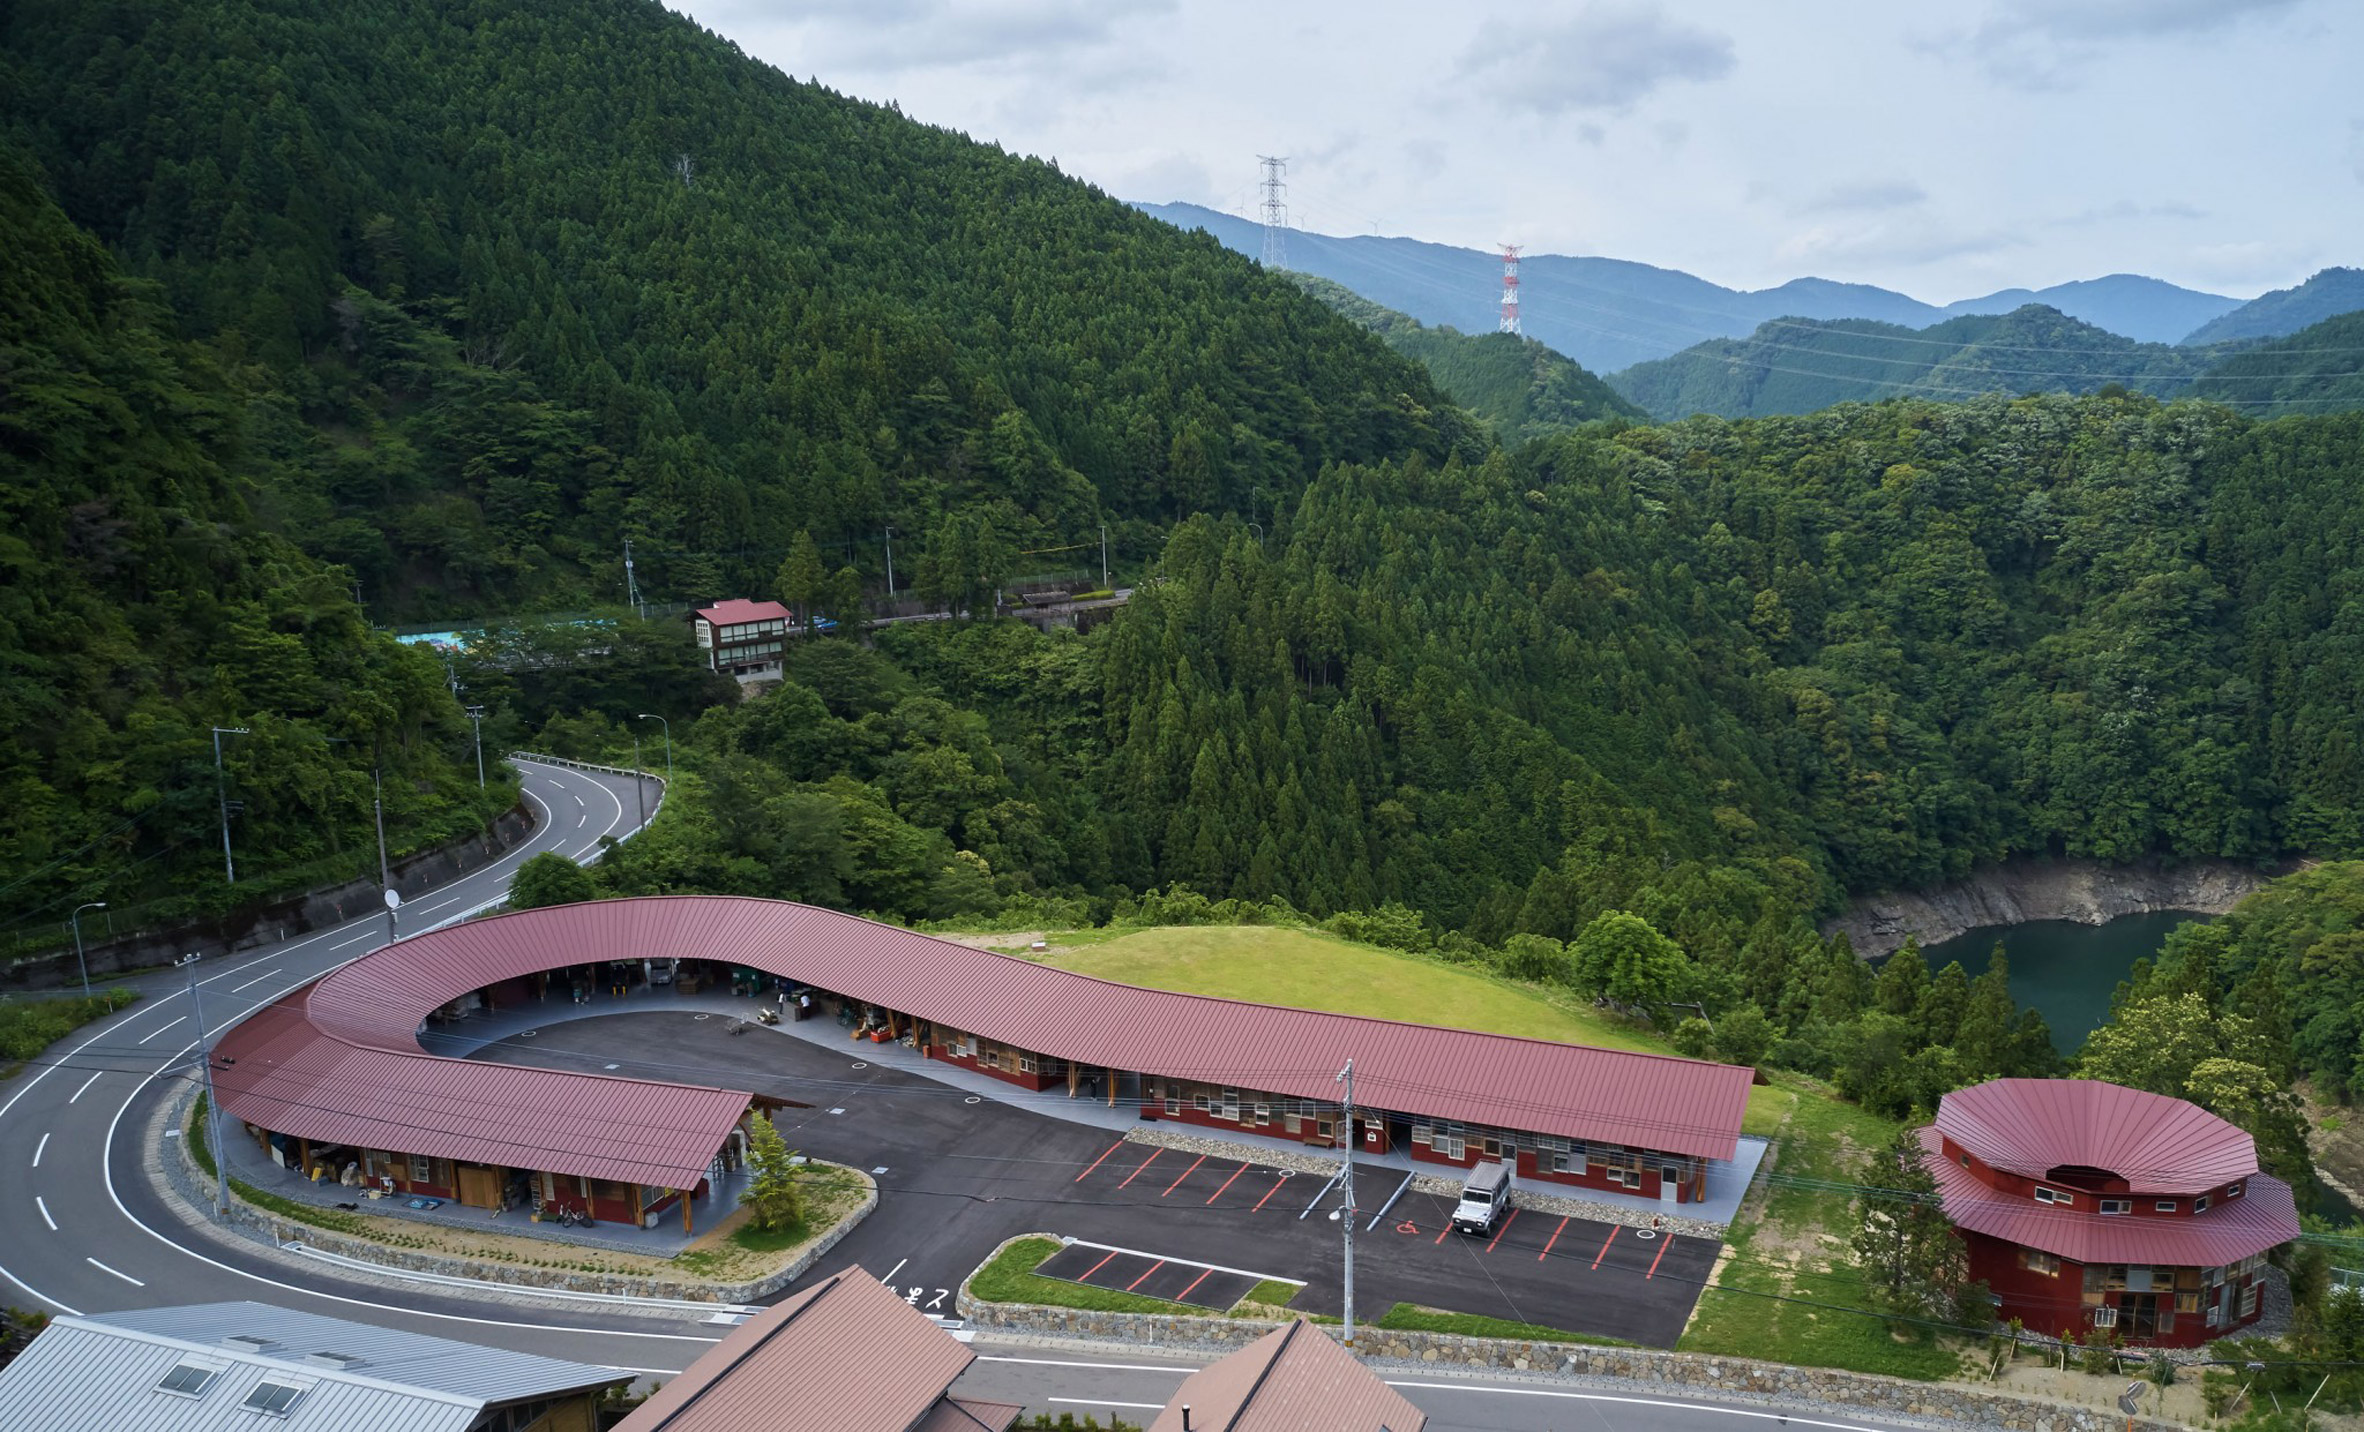 Aerial view of The Kamikatsu Zero Waste Center in Japan